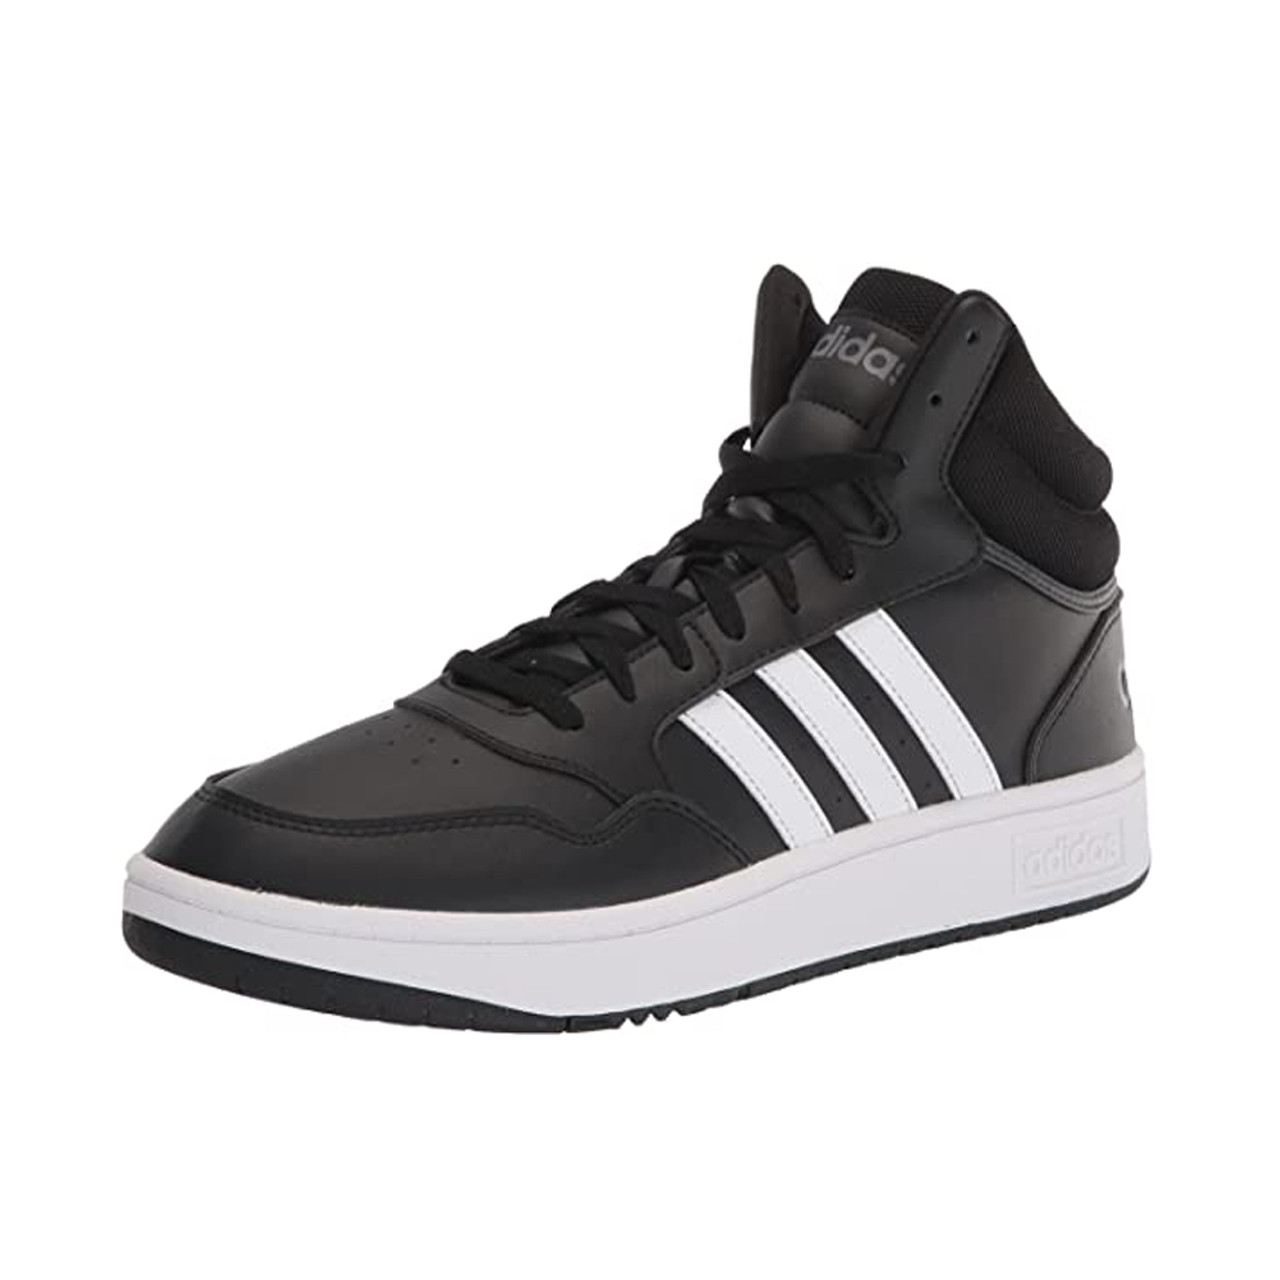 Adidas Men's Hoops 3.0 Mid Classic Basketball Shoe - Black | Discount Adidas  Men's Athletic Shoes & More - Shoolu.com | Shoolu.com